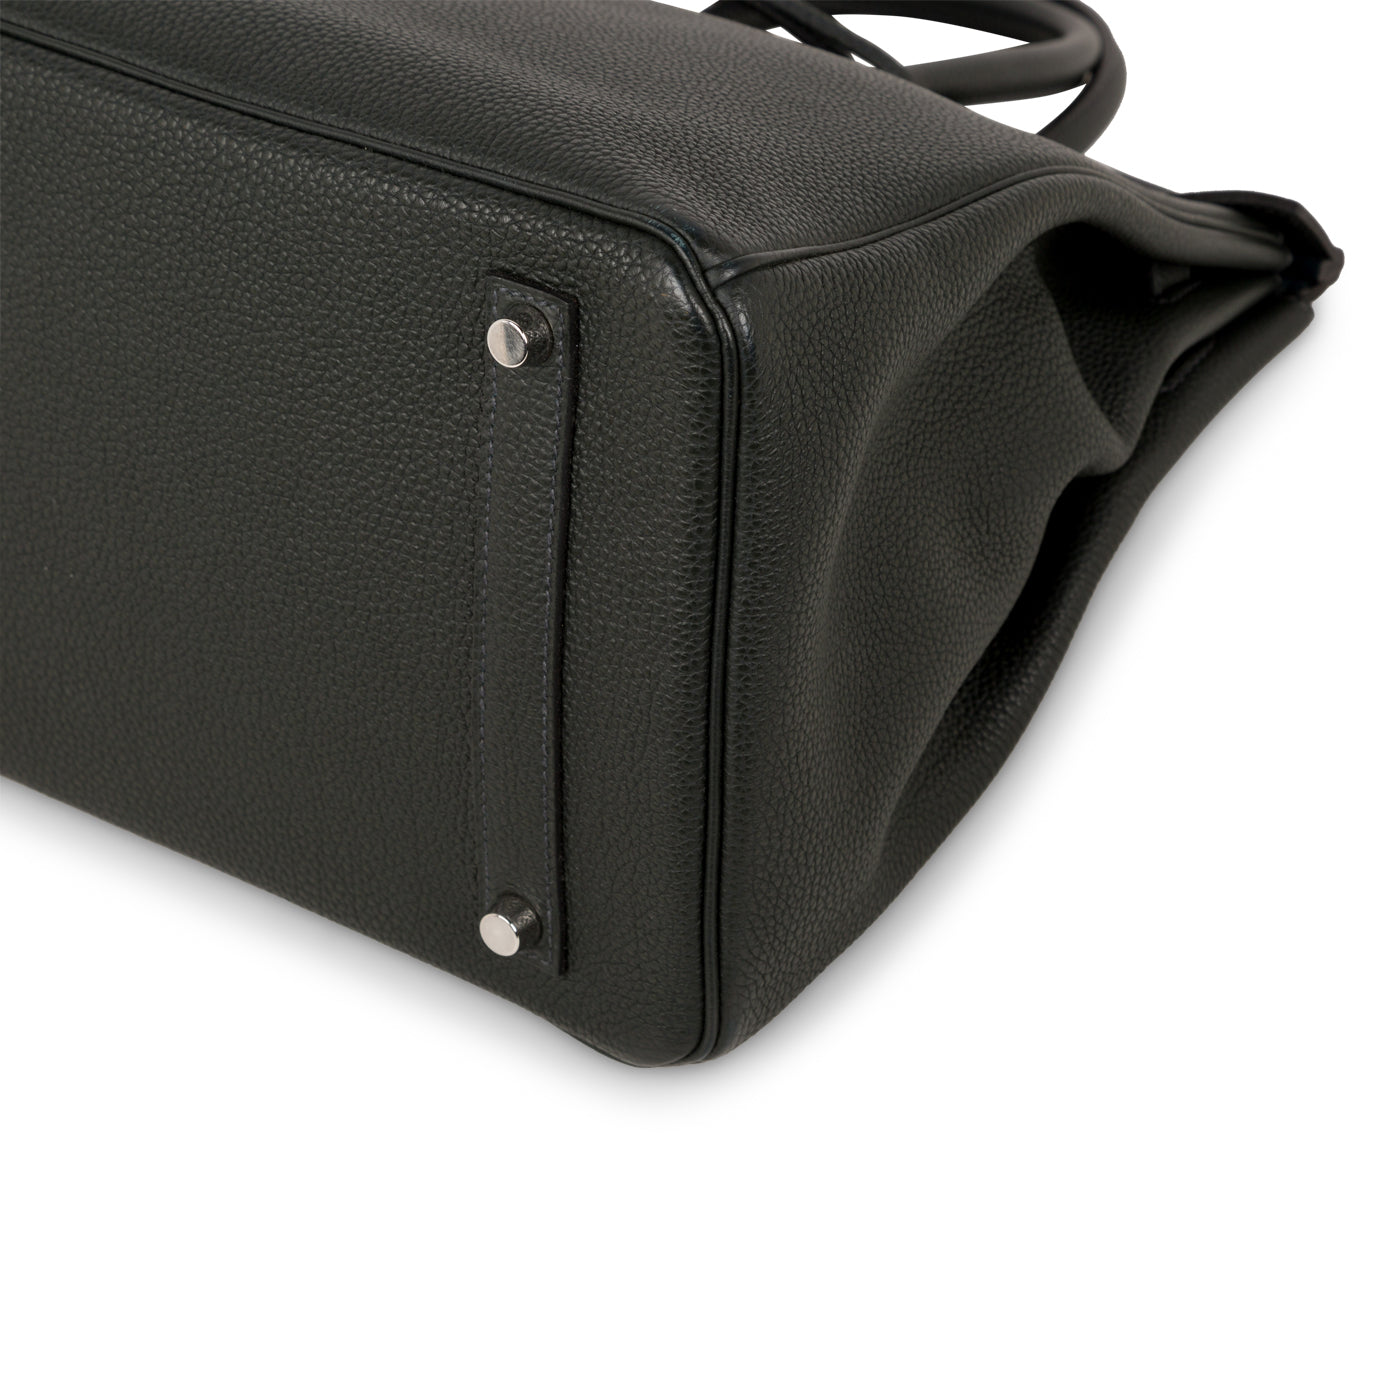 Hermès Birkin Bag, the Ultimate Timeless Classic Handbag